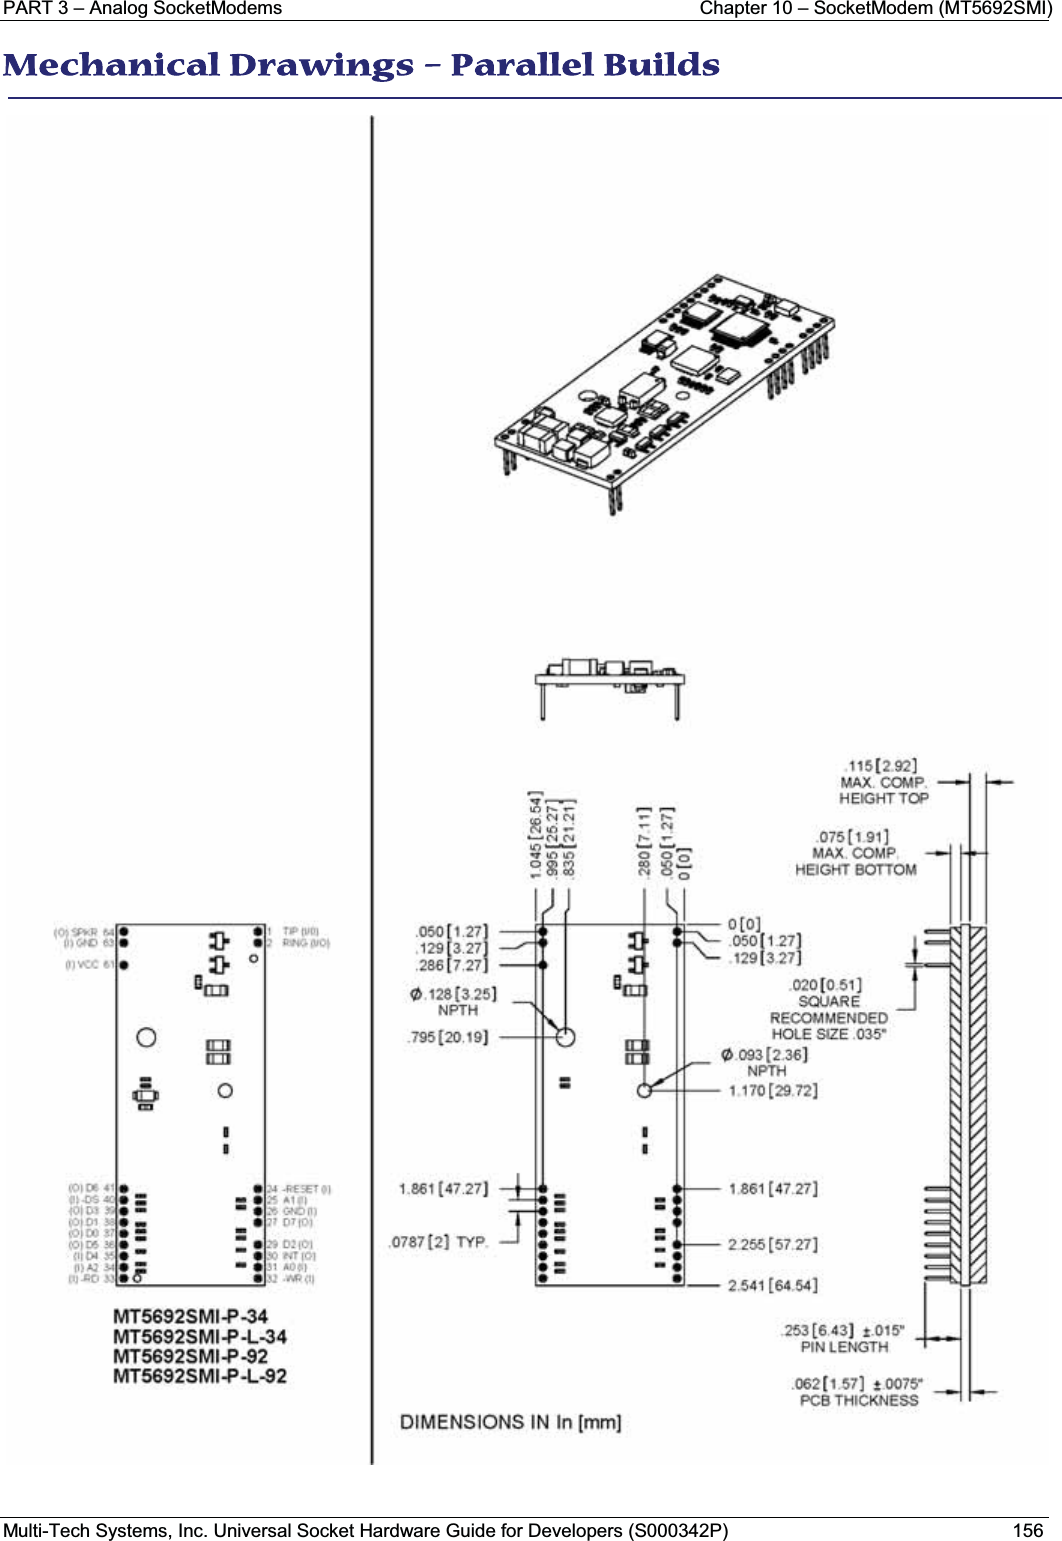 PART 3 – Analog SocketModems Chapter 10 – SocketModem (MT5692SMI)Multi-Tech Systems, Inc. Universal Socket Hardware Guide for Developers (S000342P) 156MMechanical Drawings – Parallel Builds 